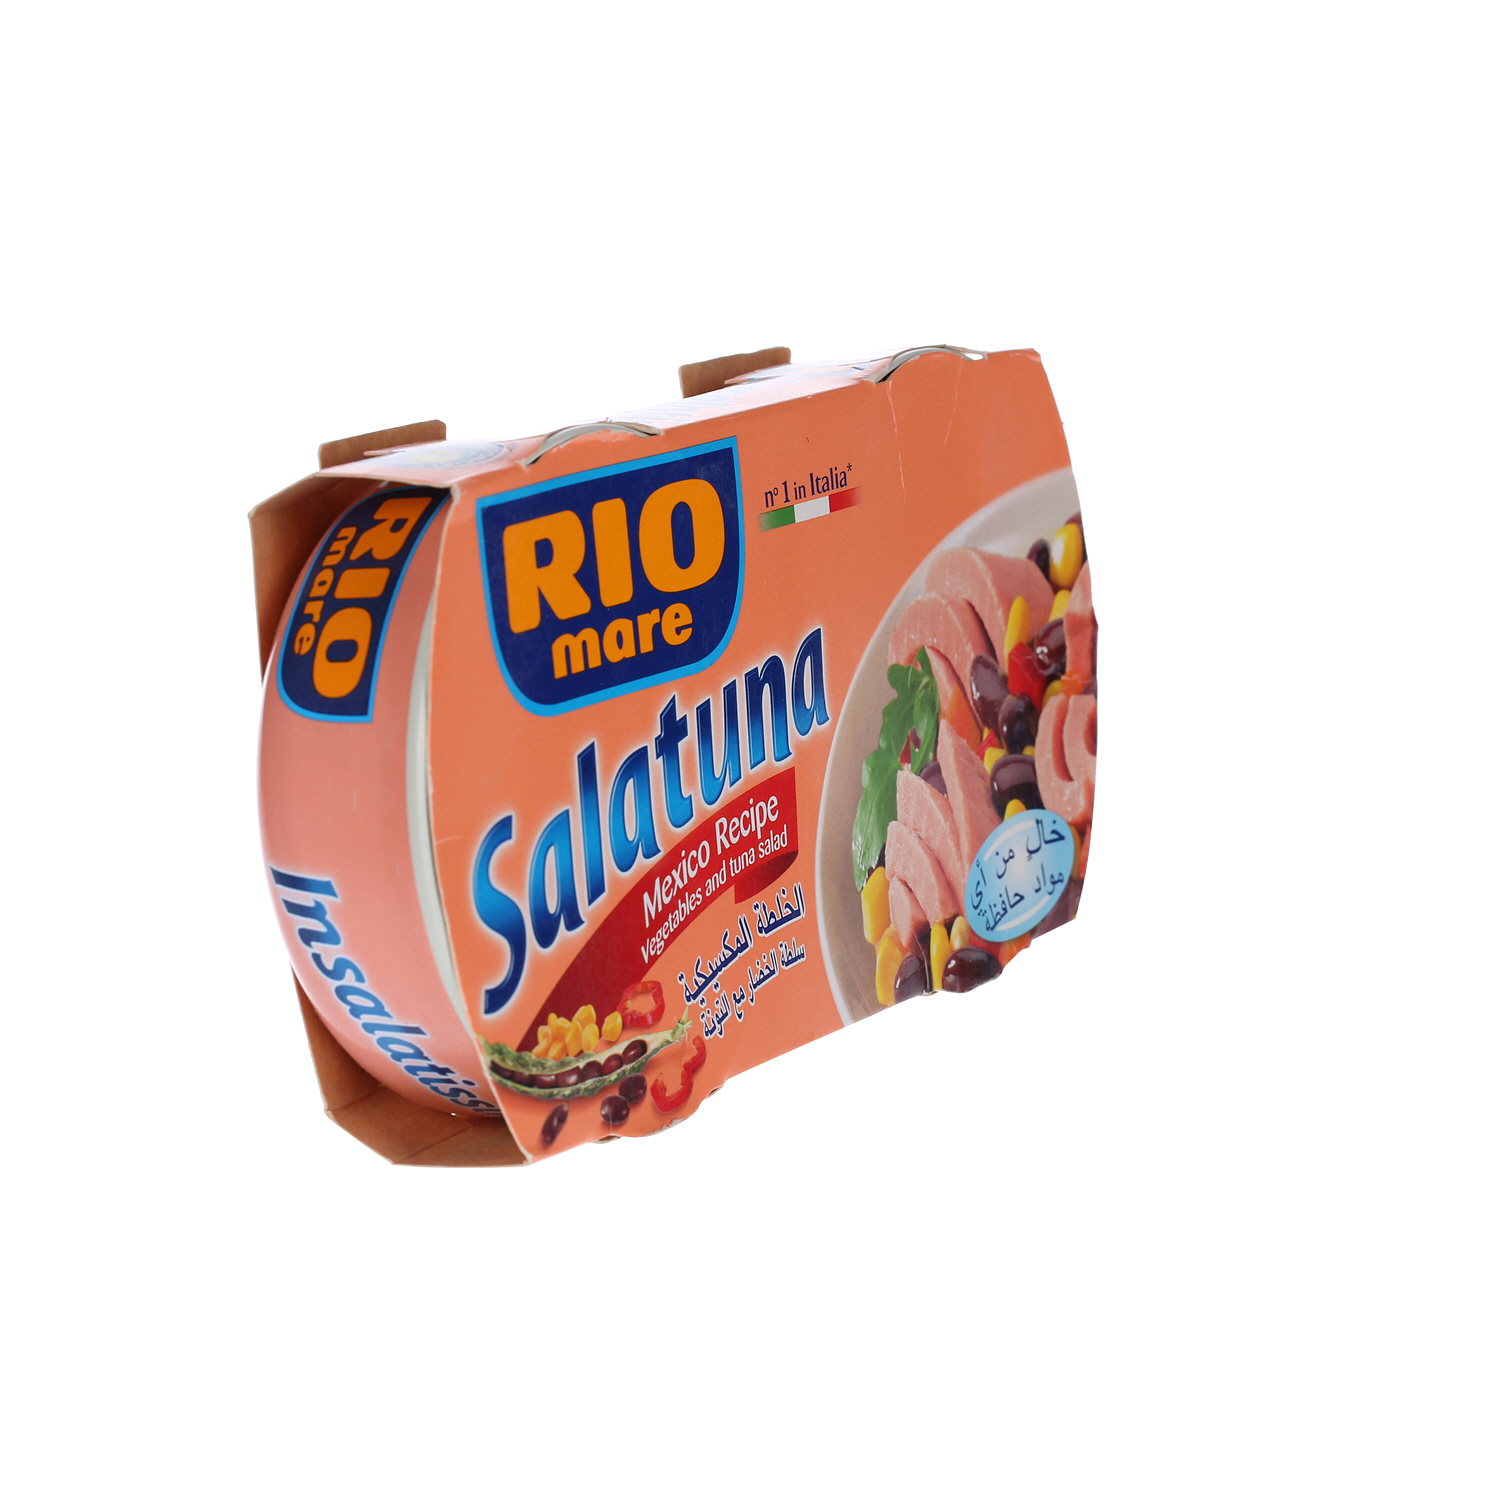 Rio Mare Salatuna Mexico 160 g × 2 Pack